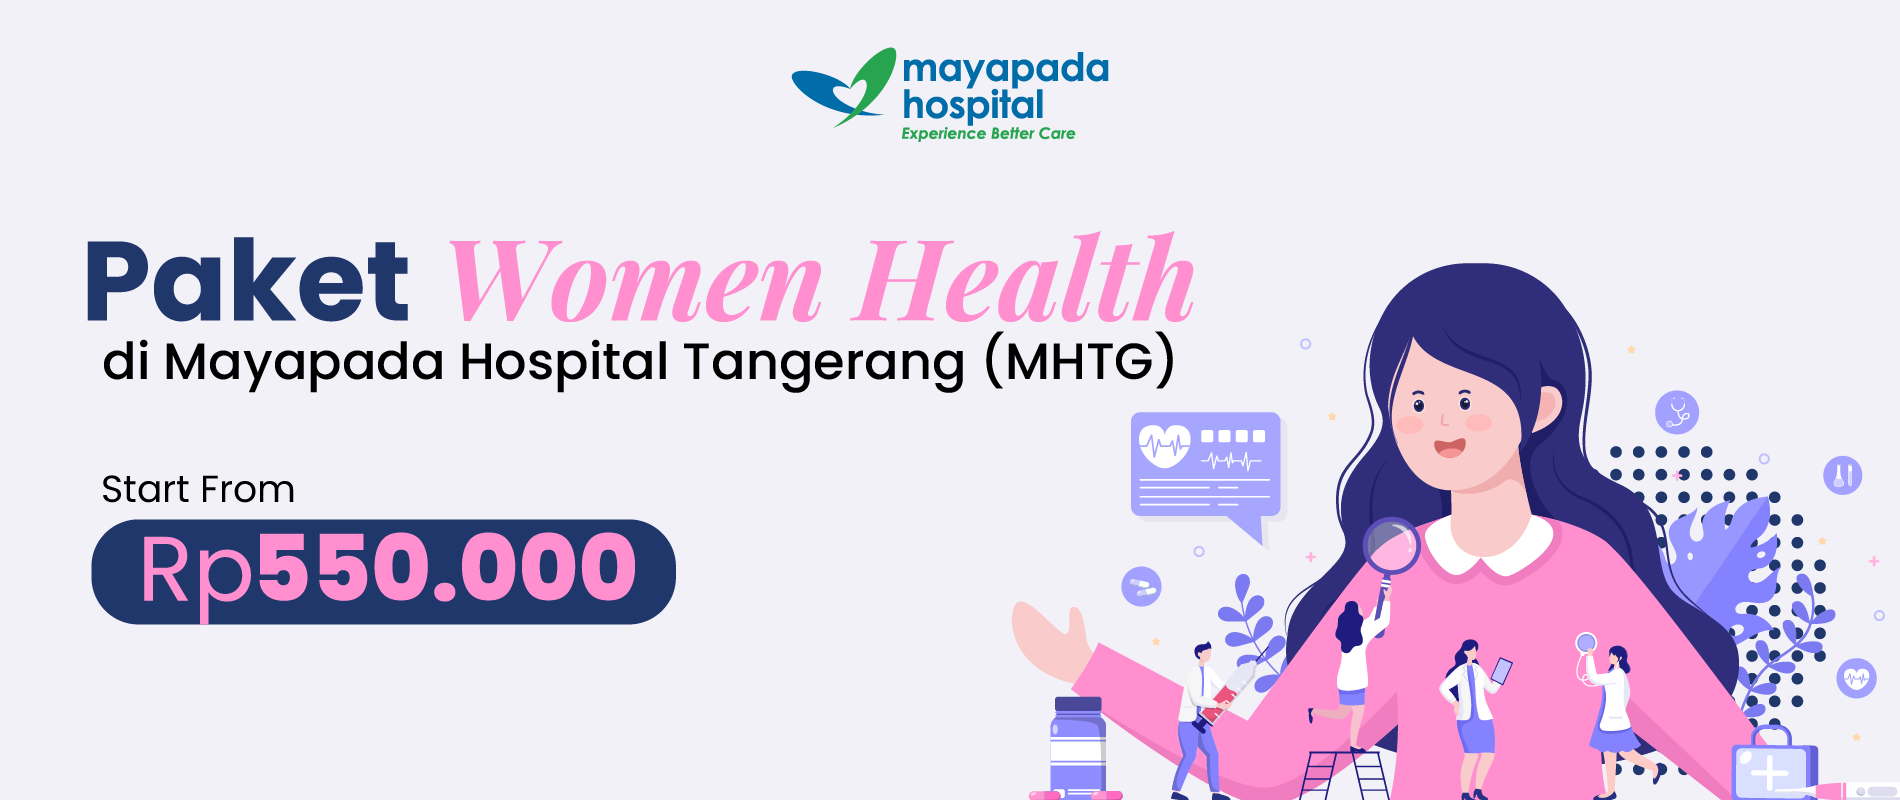 Paket Promo Women Health Mayapada Hospital Tangerang IMG